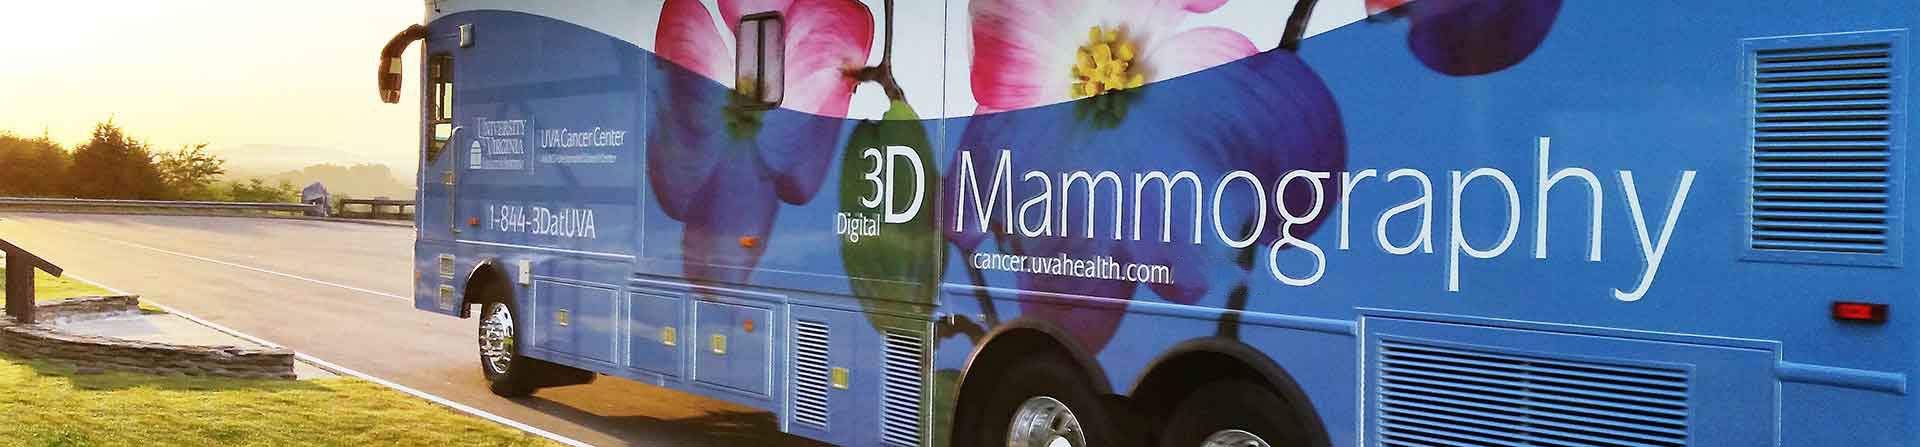 mobile mammography van